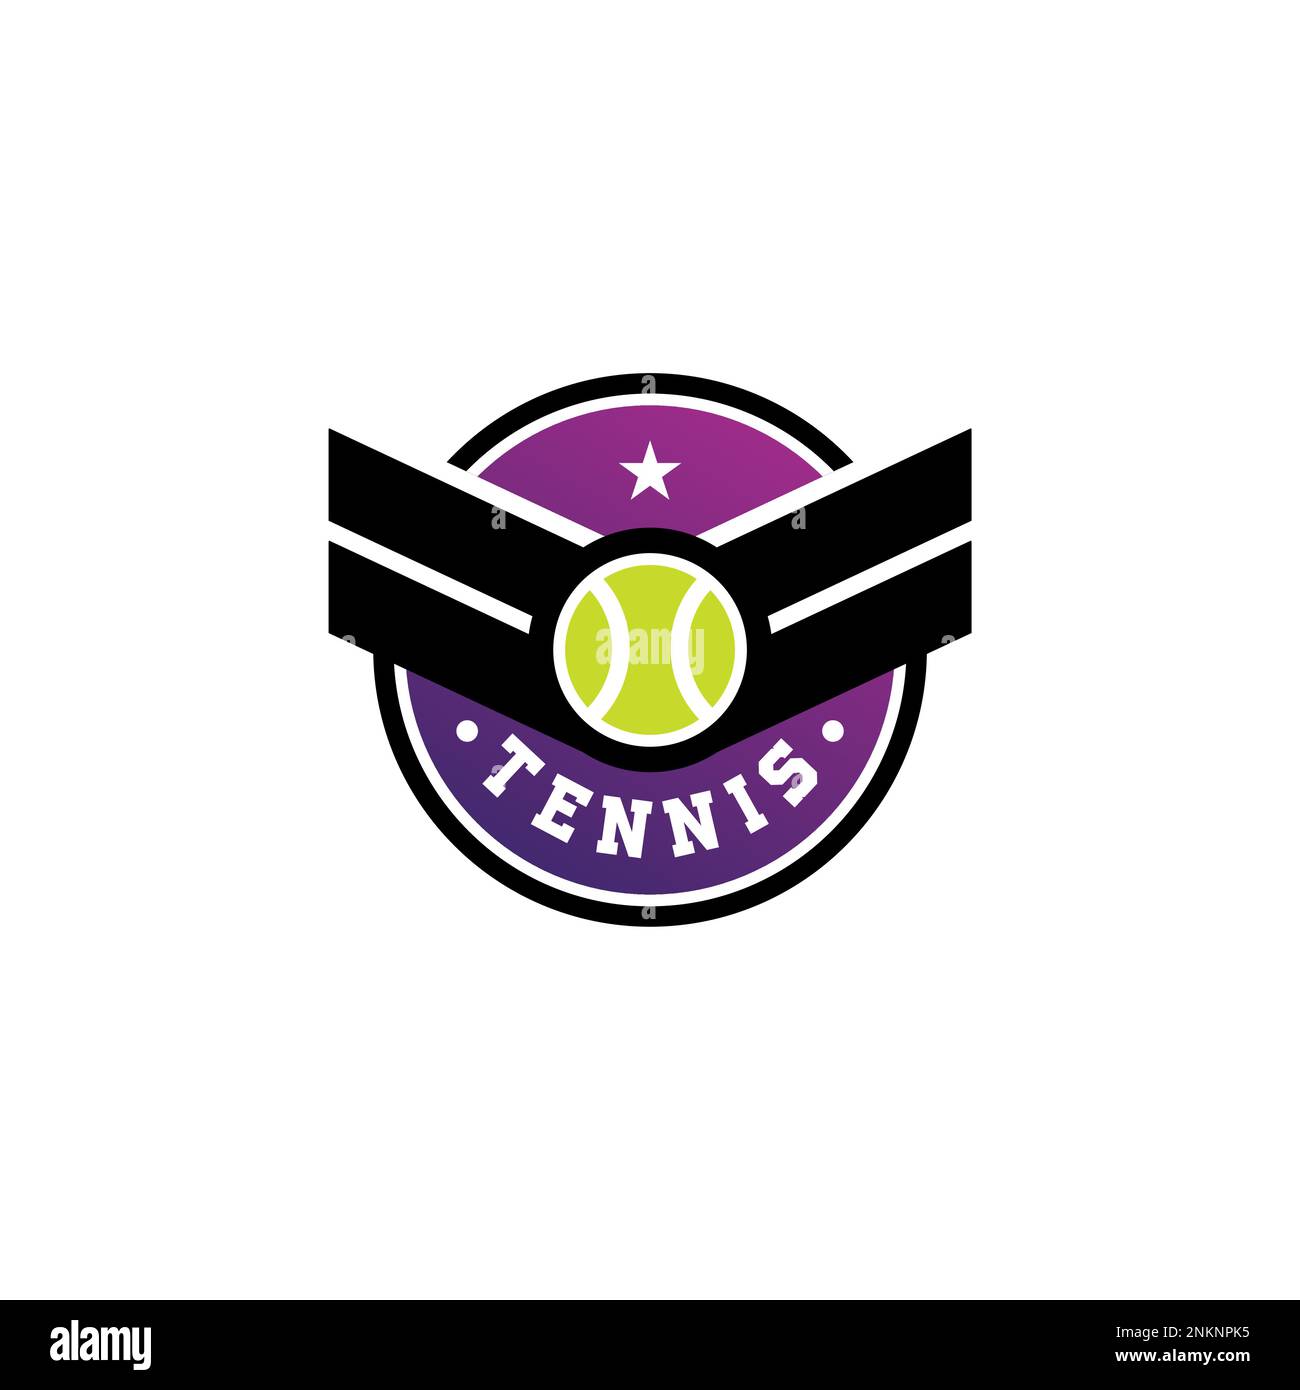 Tennis Army Club Logo Design Vector Illustration Stock Vector